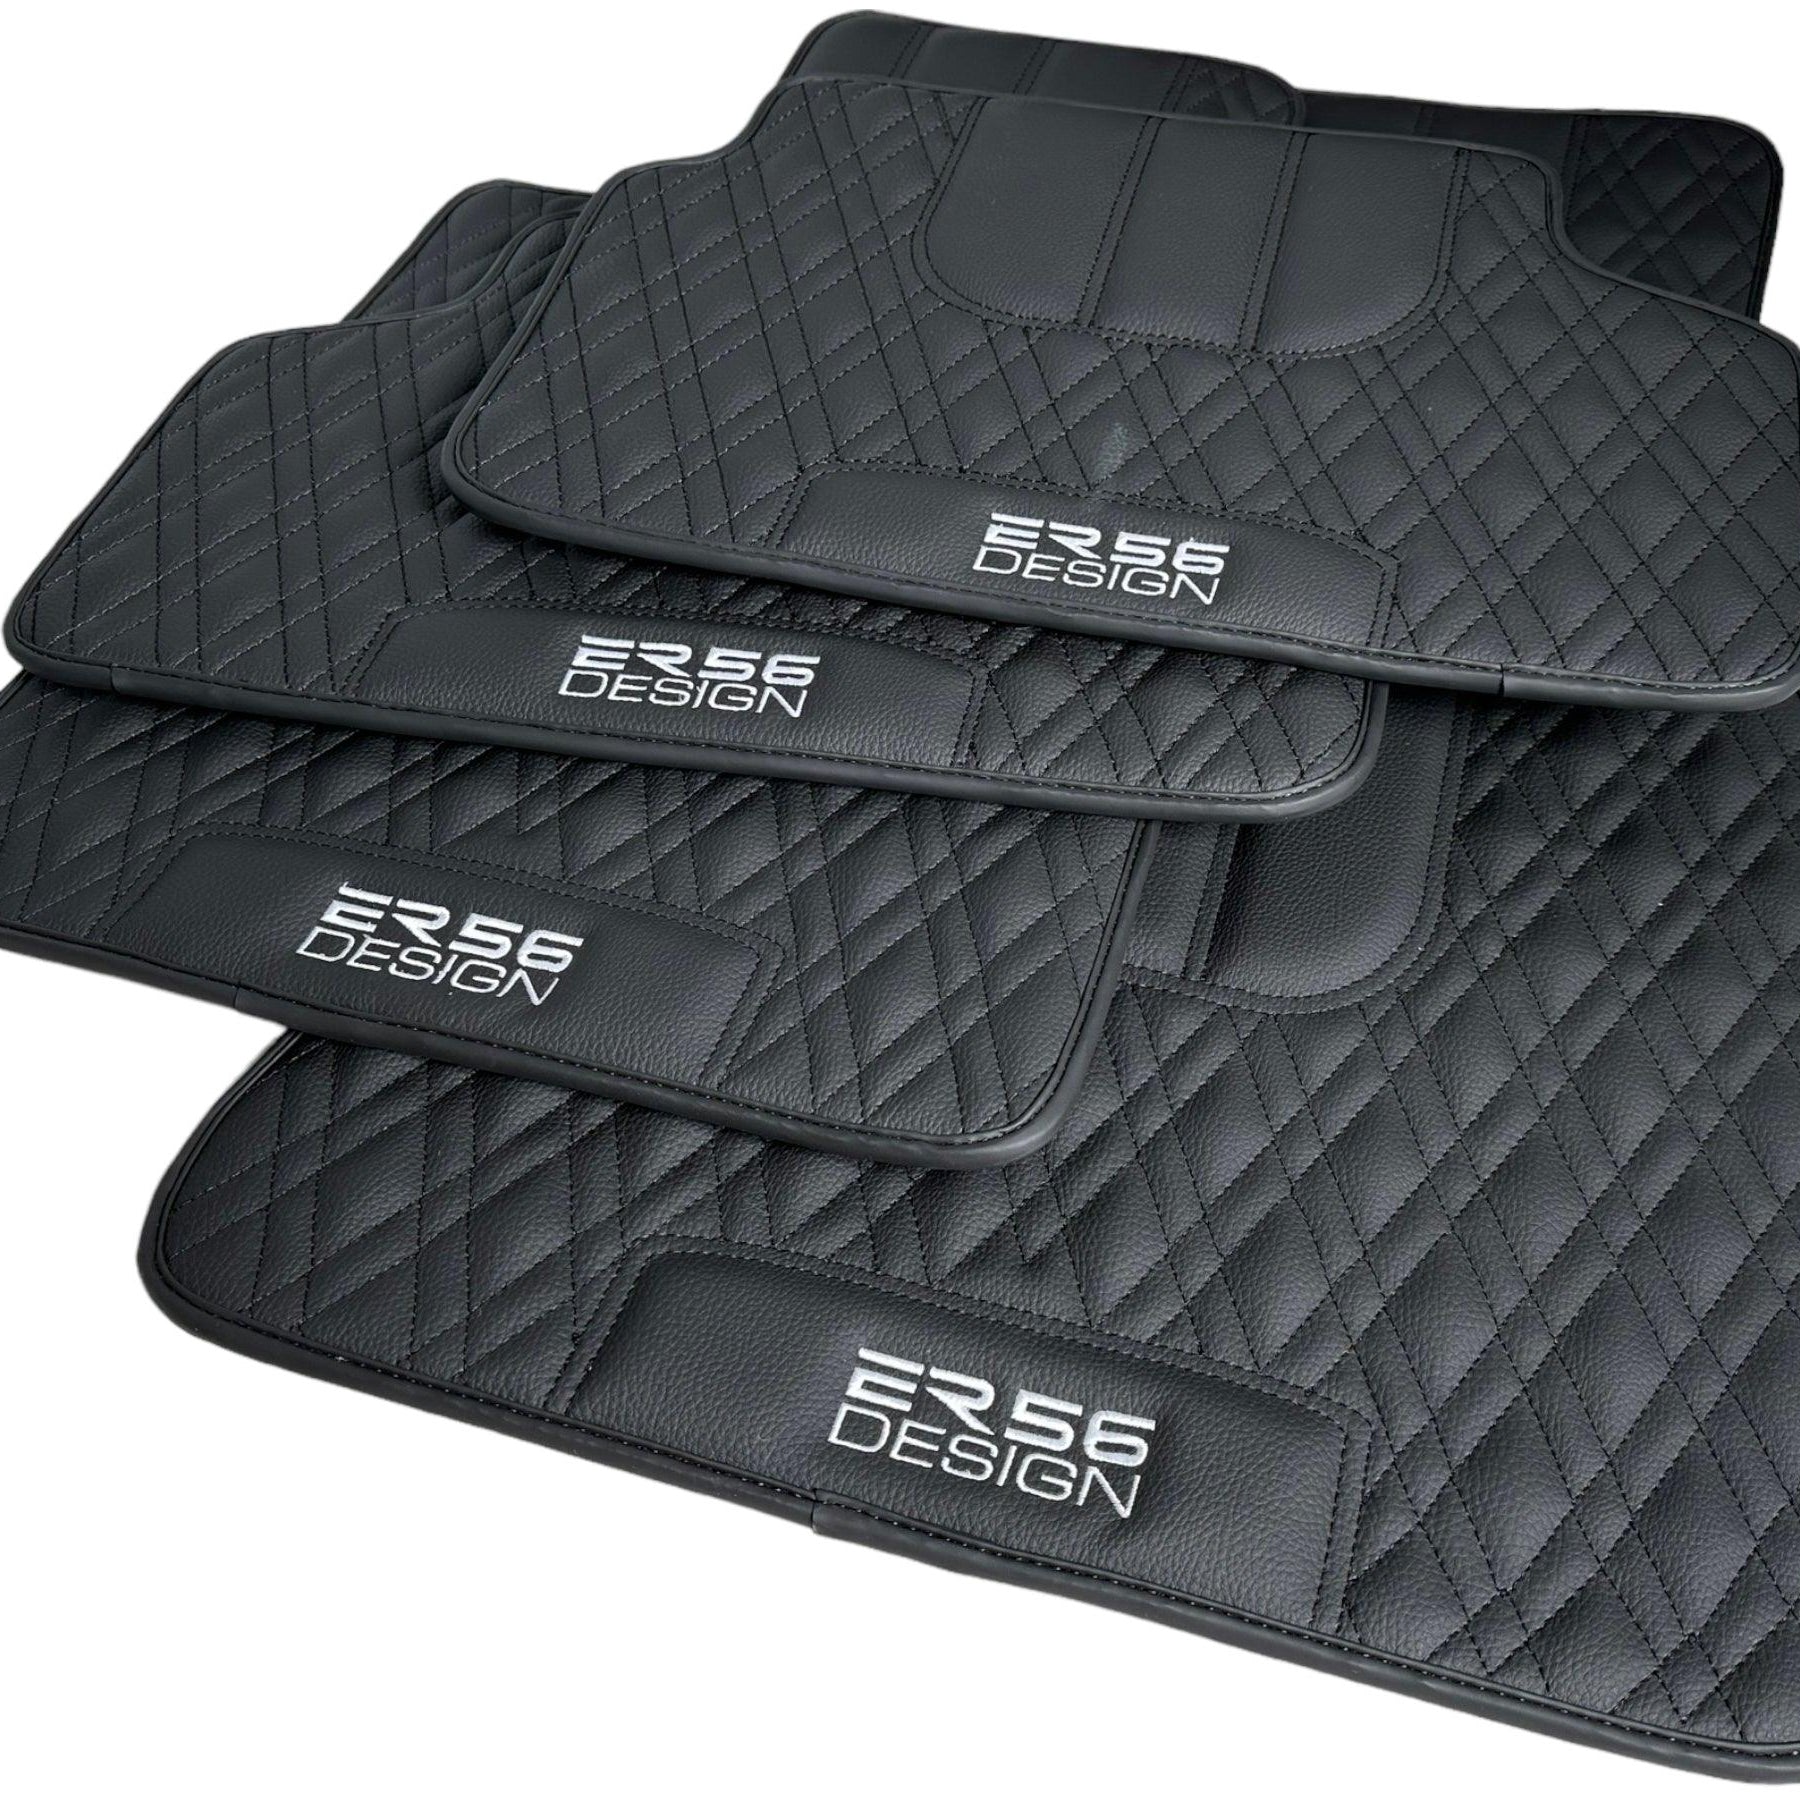 Floor Mats For BMW 8 Series G14 Black Leather Er56 Design - AutoWin